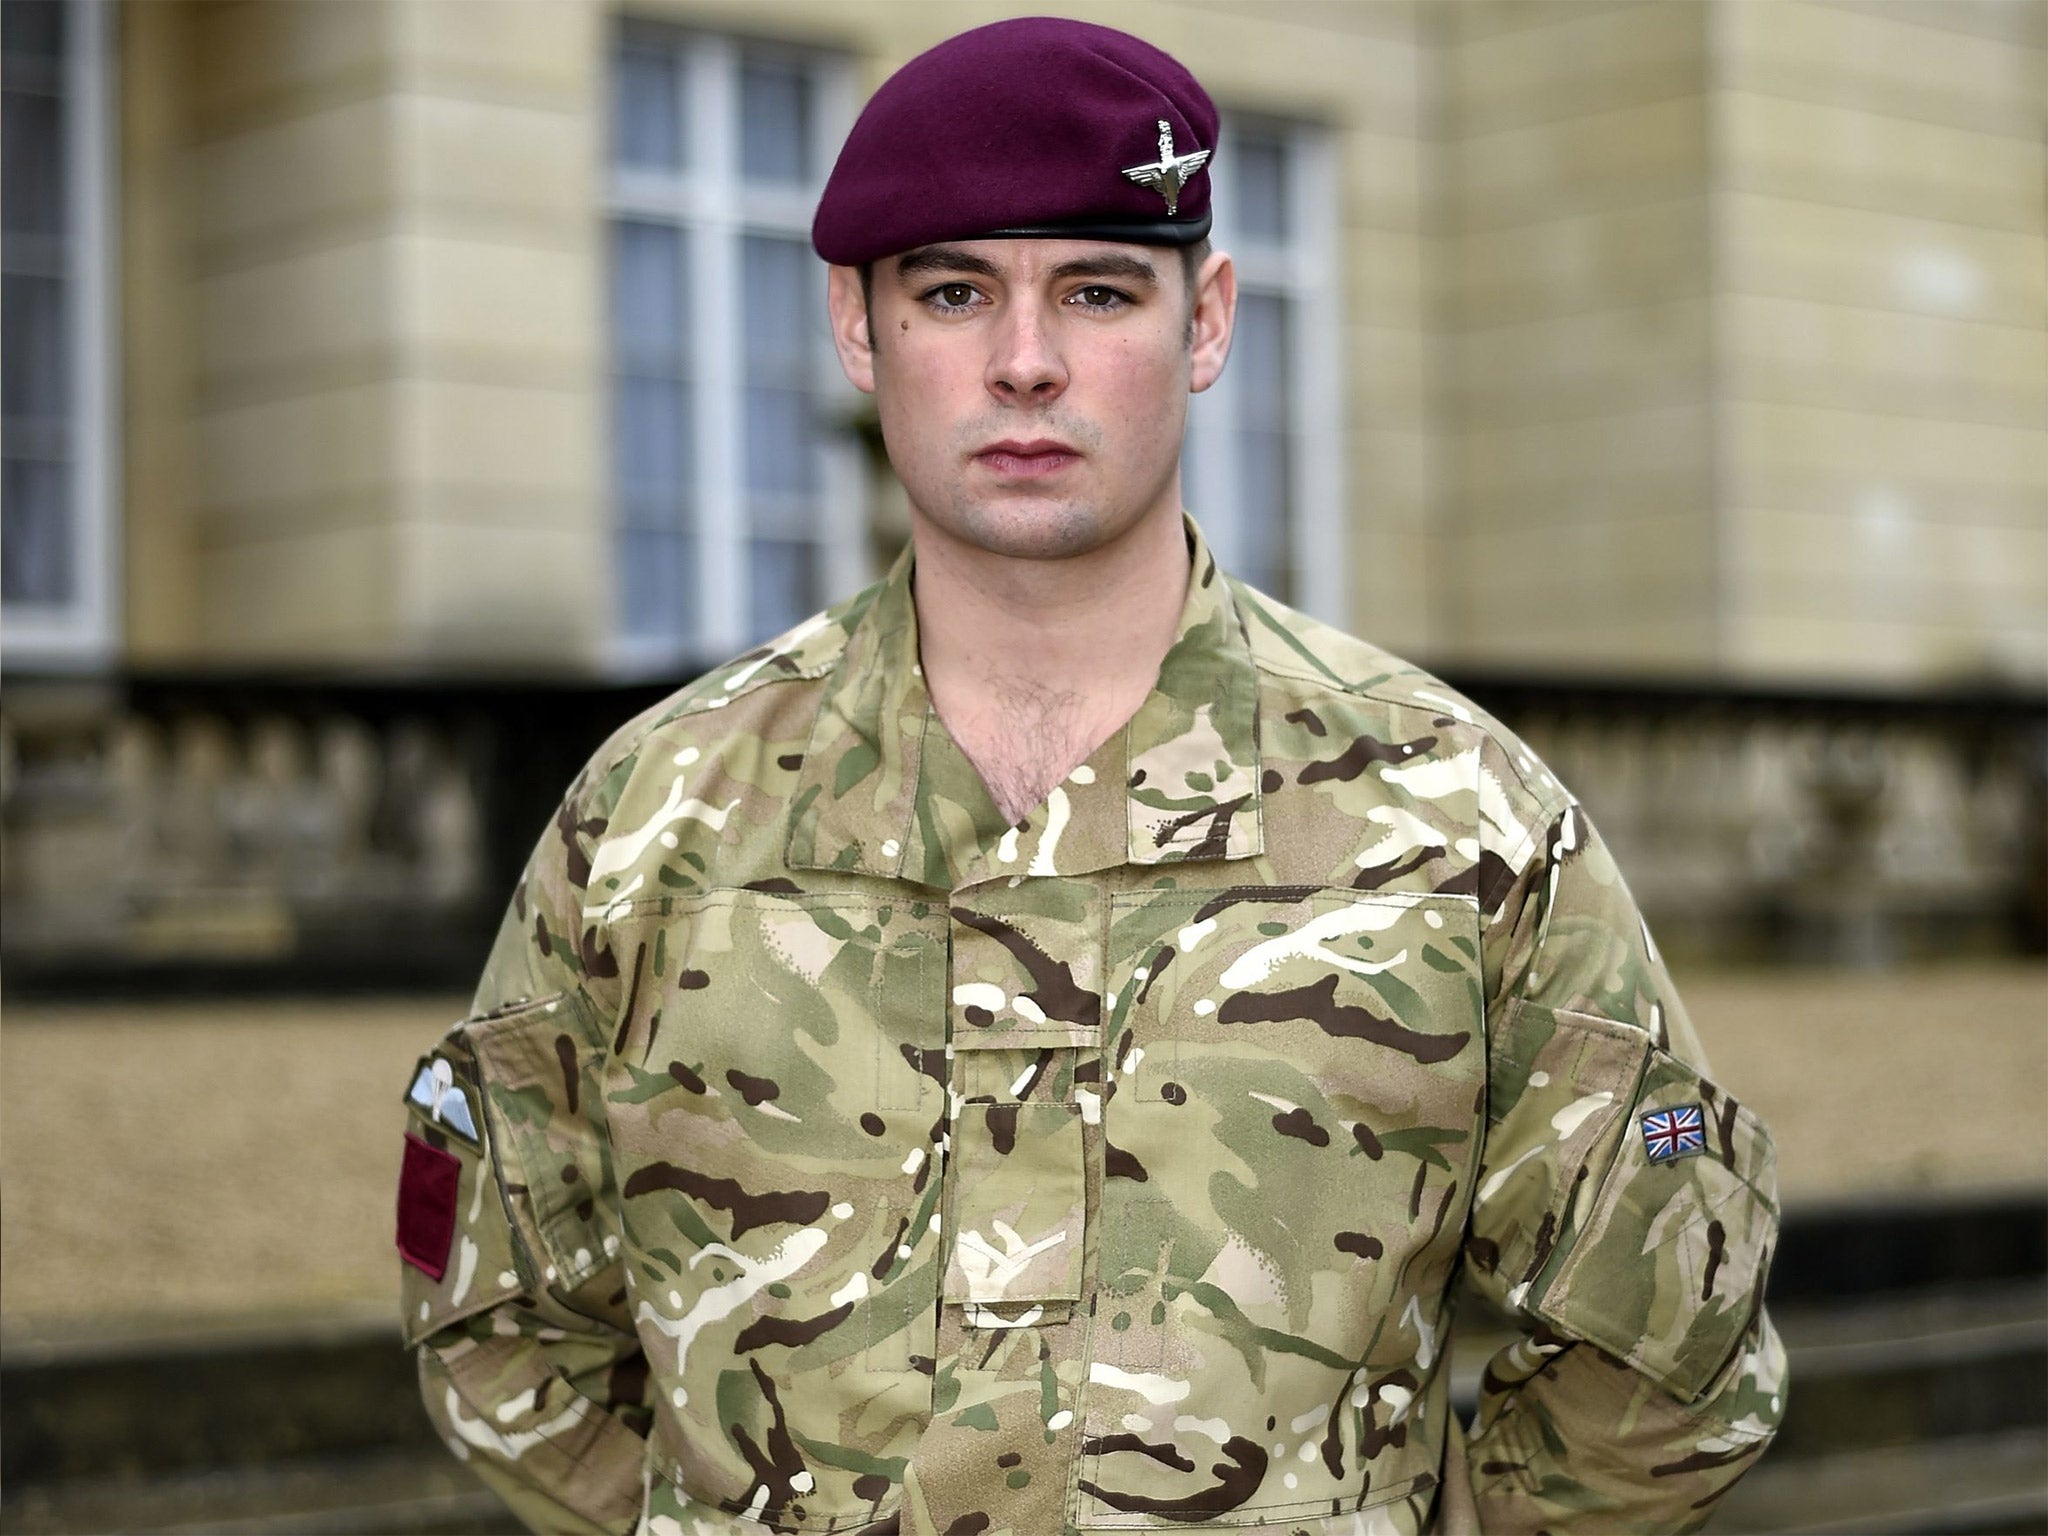 Lance Corporal Joshua Mark Leakey of the Parachute Regiment